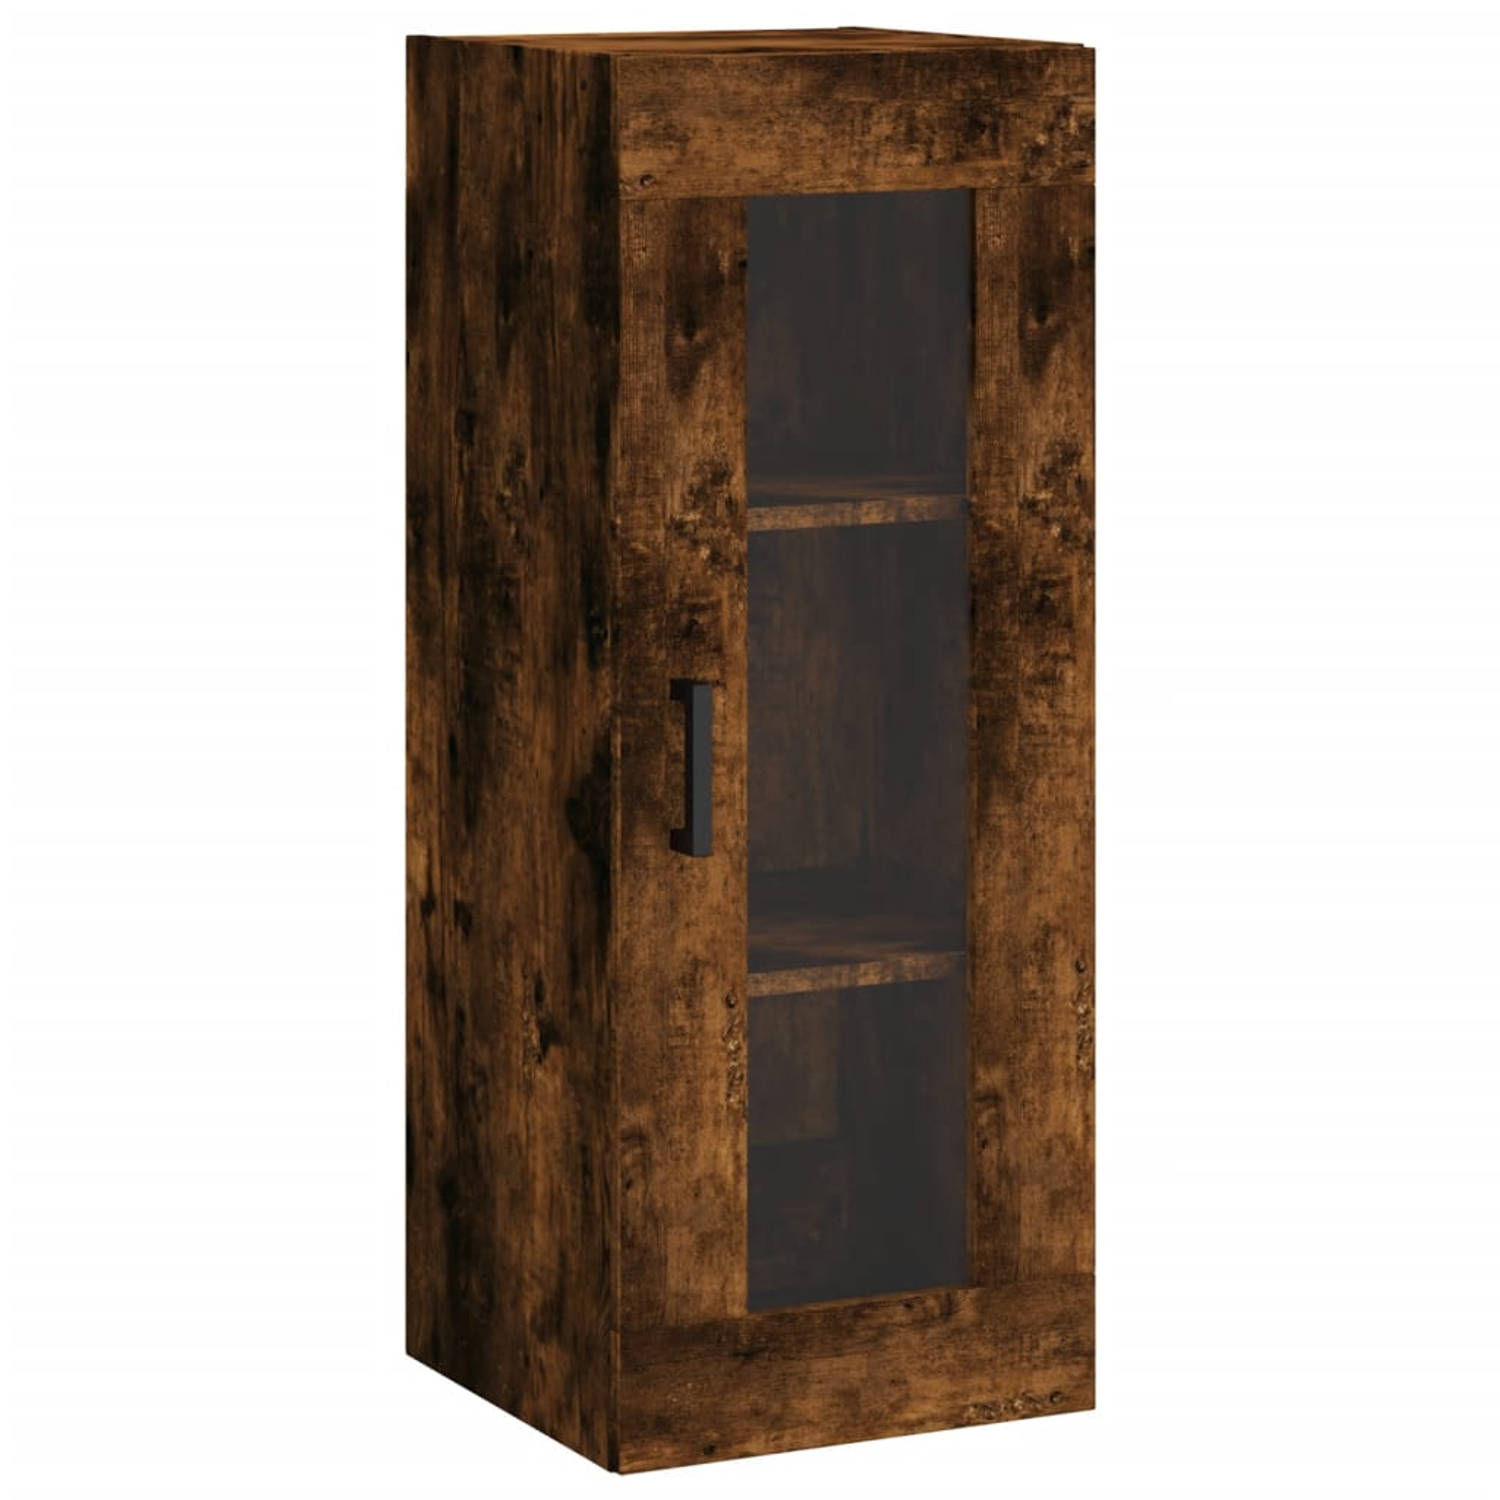 The Living Store Wandgemonteerde Hangkast - Smoked Eiken - 34.5 x 34 x 90 cm - Duurzaam Materiaal